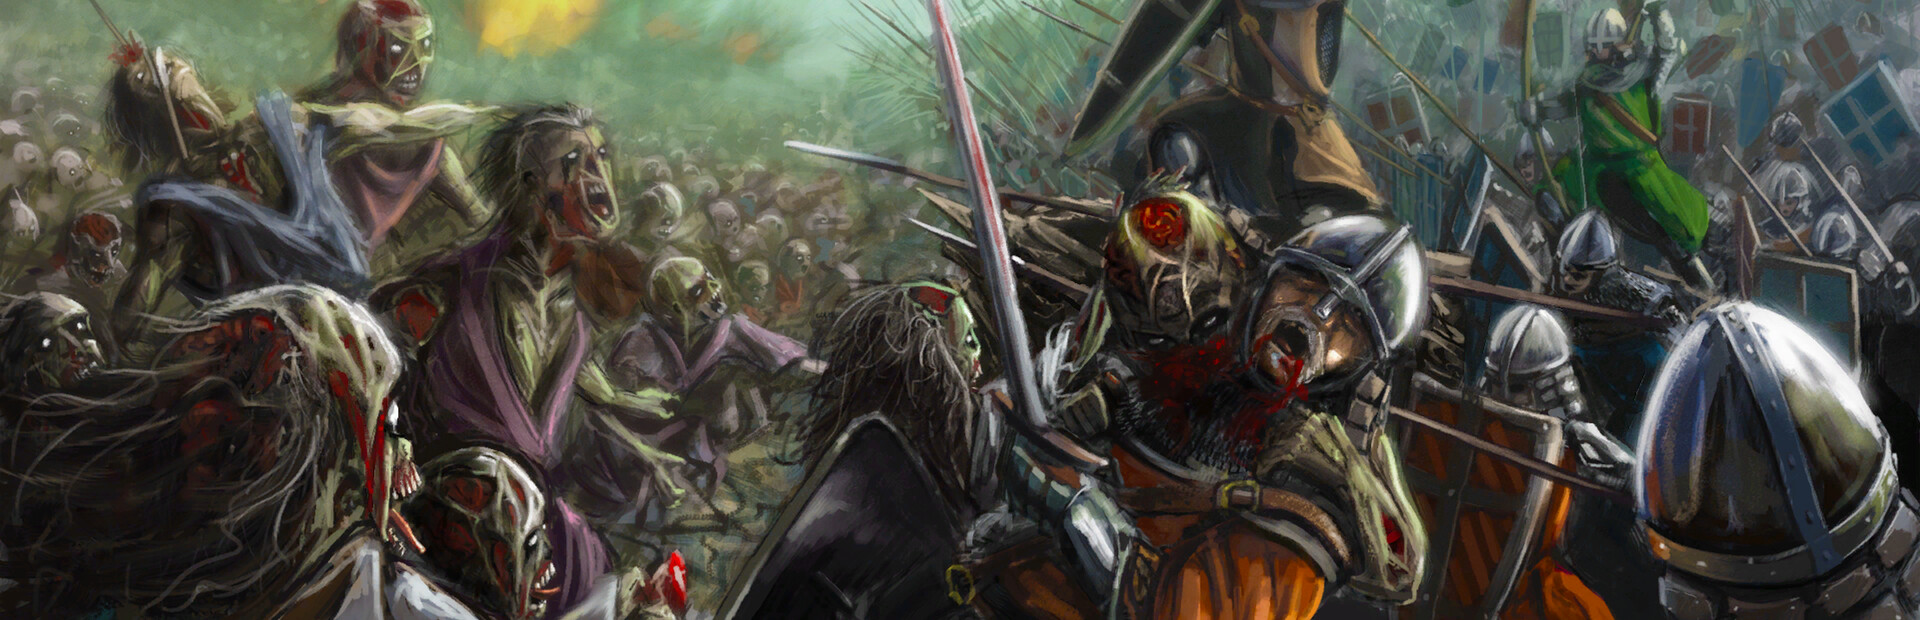 Kingdom Wars 2: Definitive Edition cover image